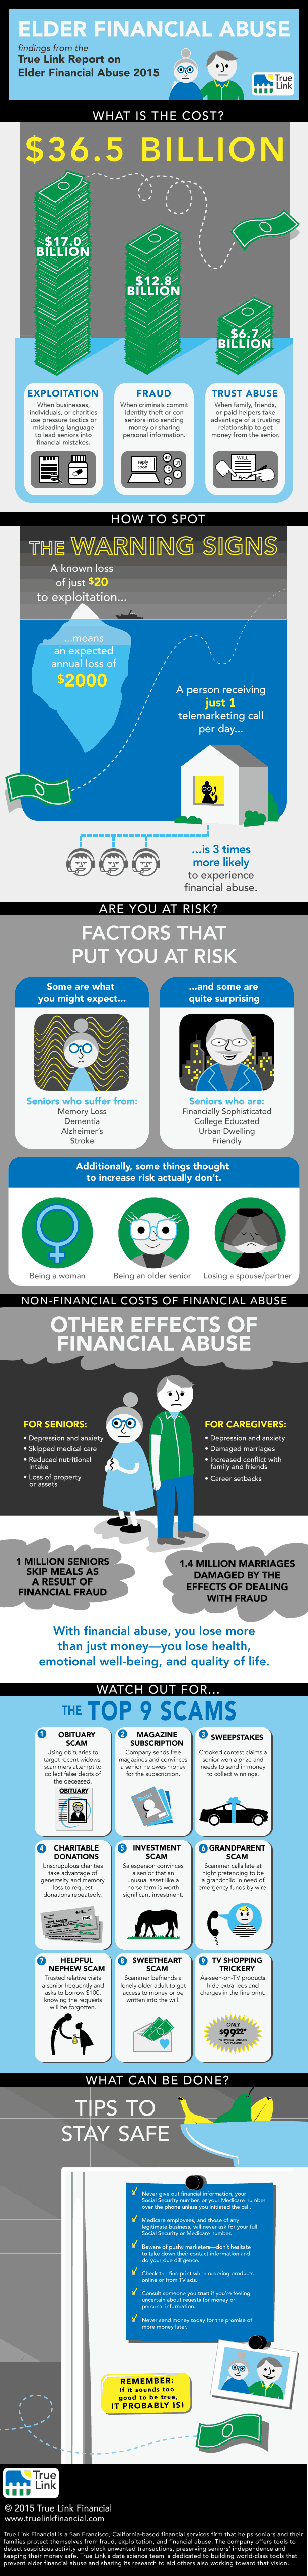 elder financial abuse infographic